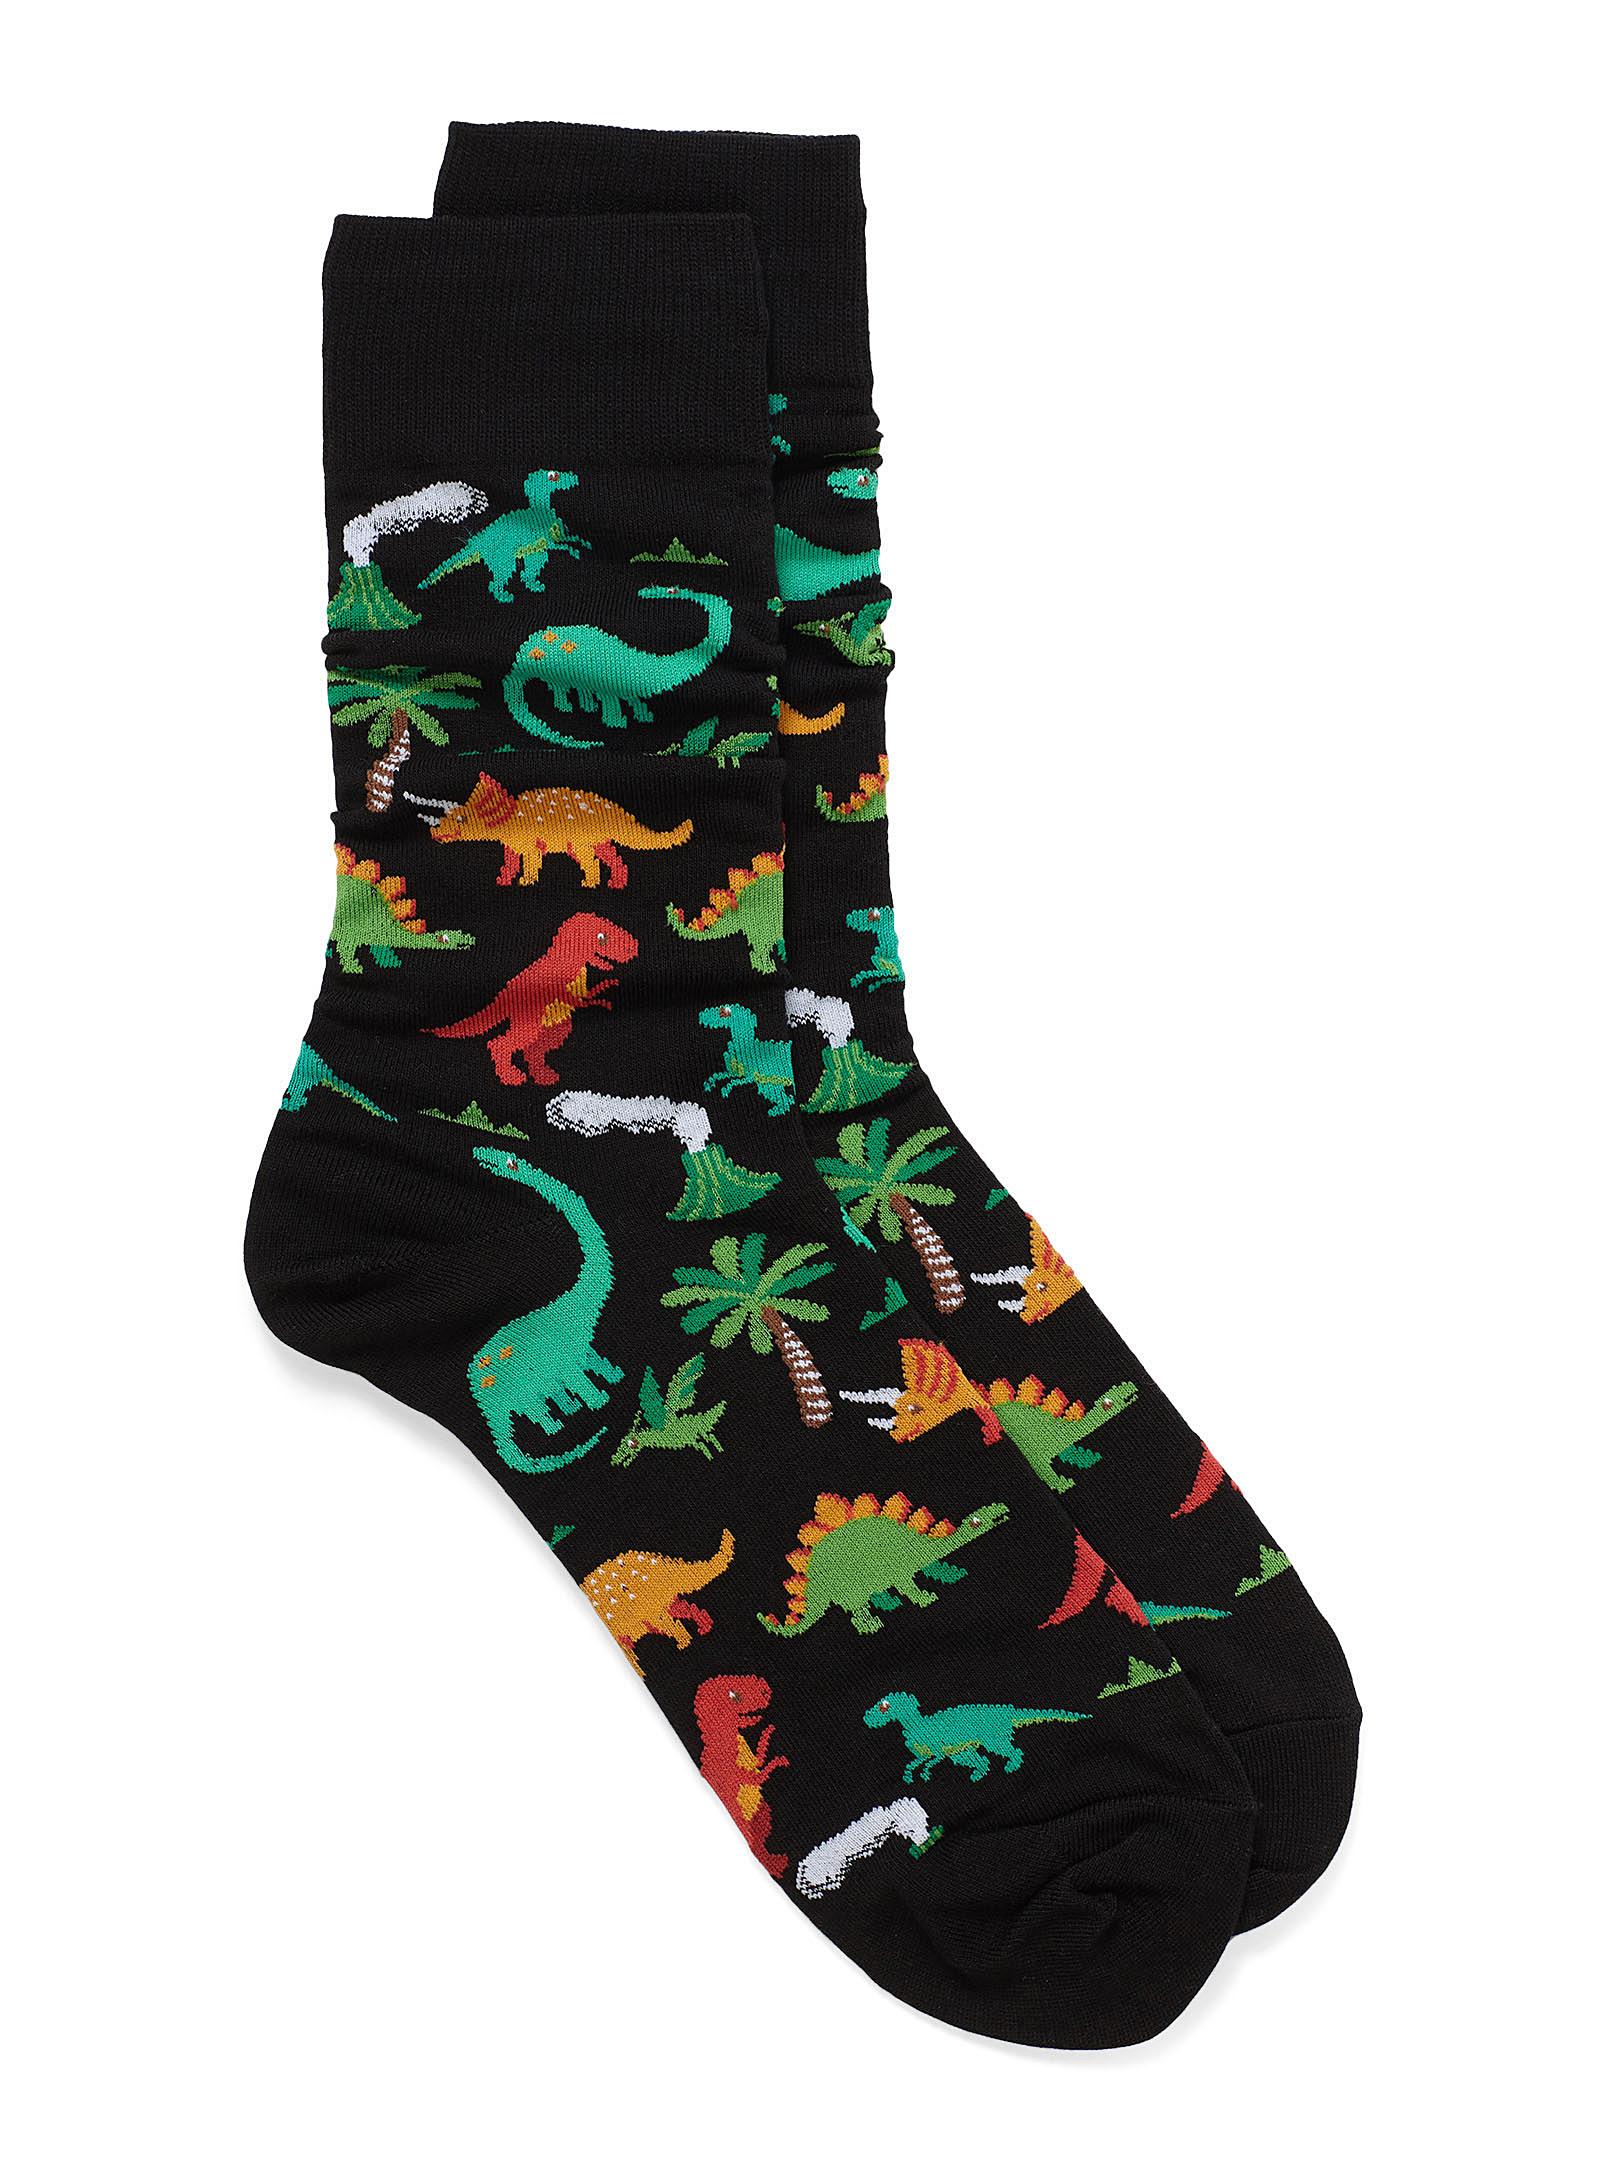 Hot Sox Dinosaurs Socks In Patterned Black